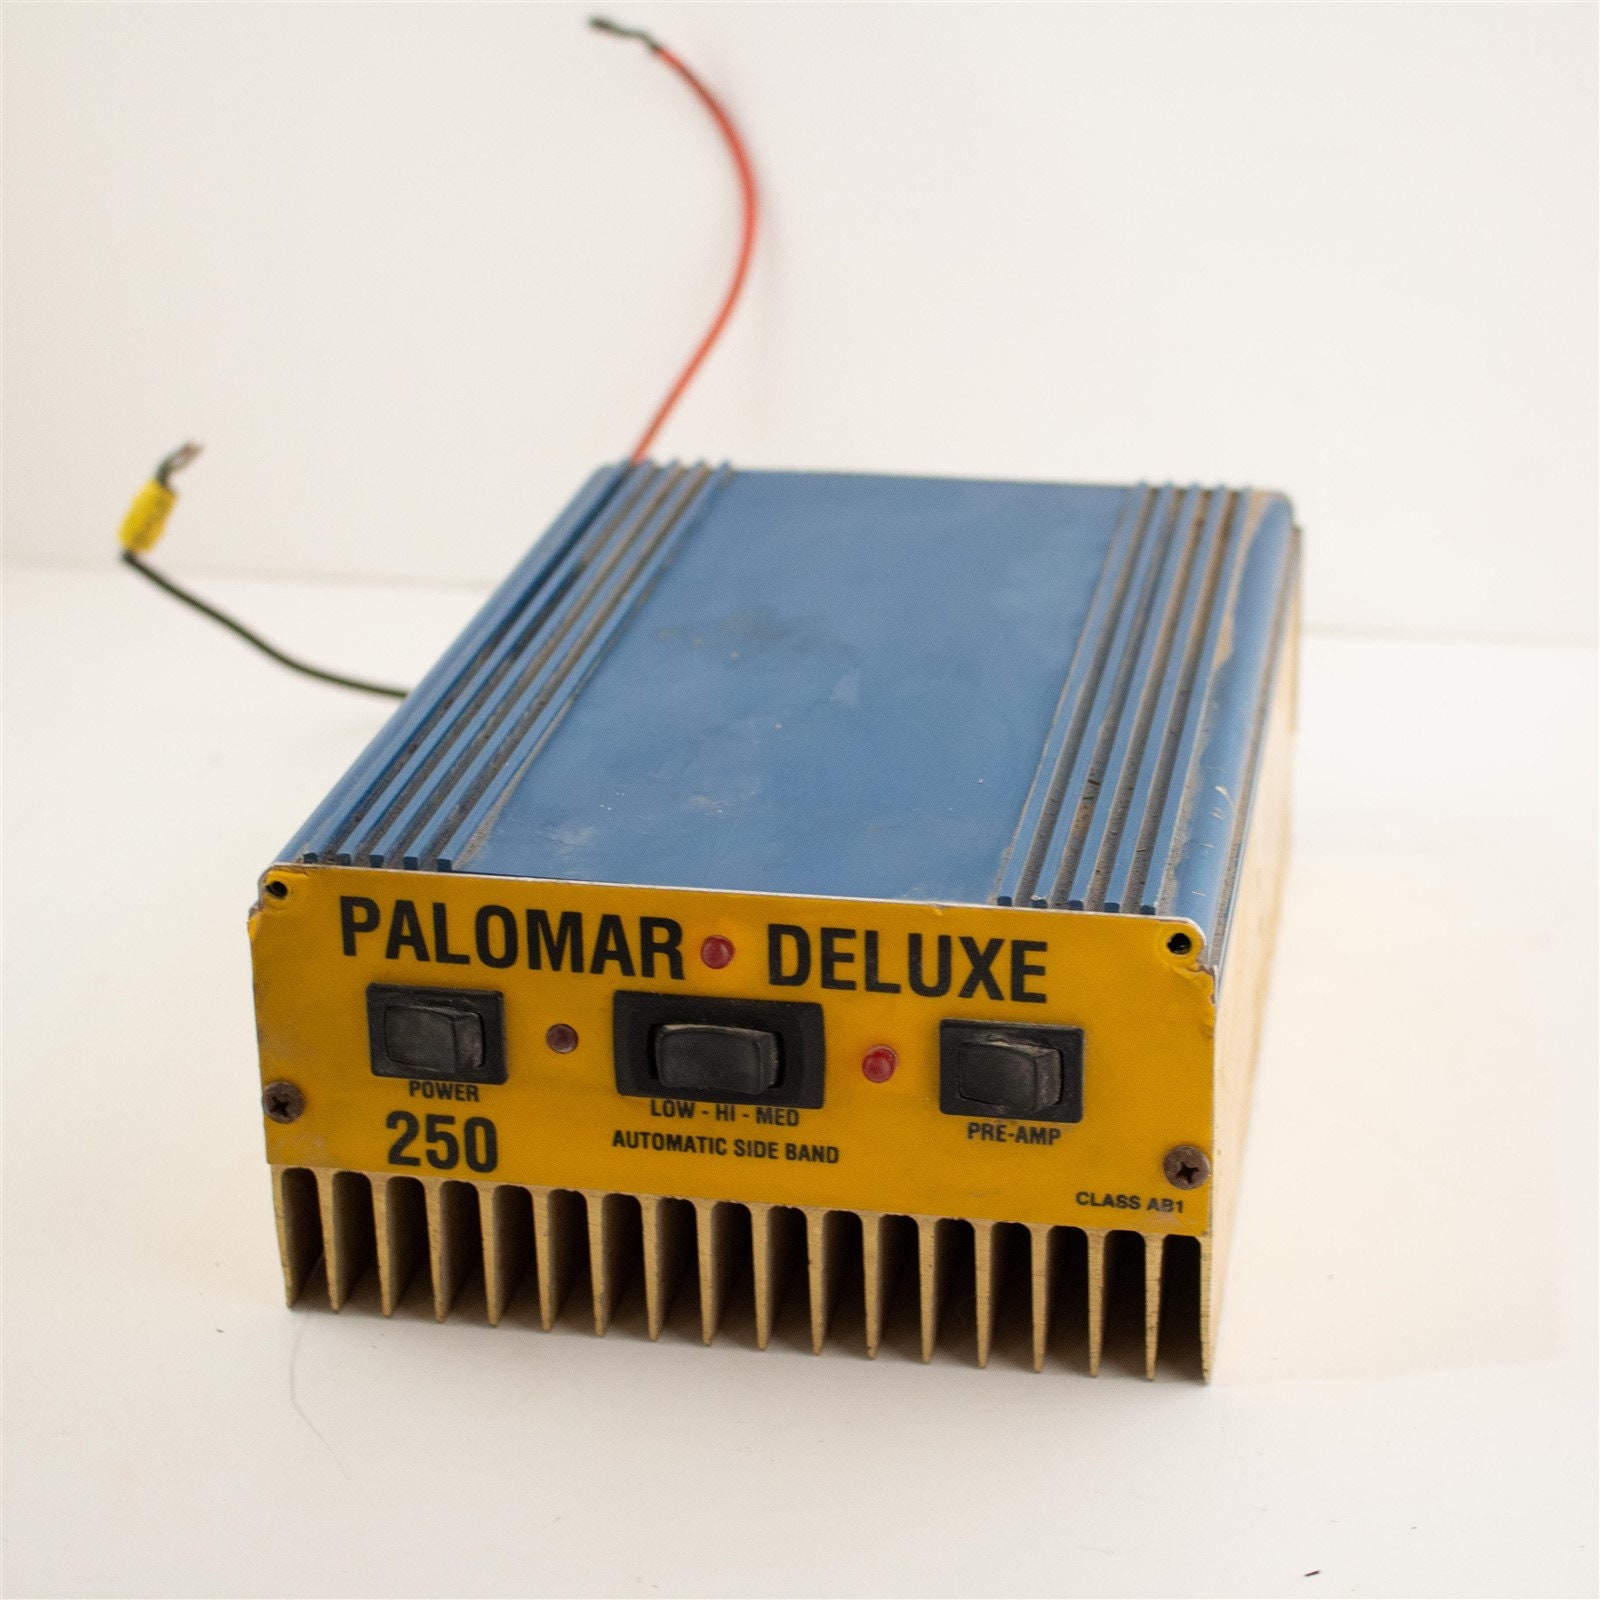 Palomar Deluxe 250 Linear CB Amplifier powers Up